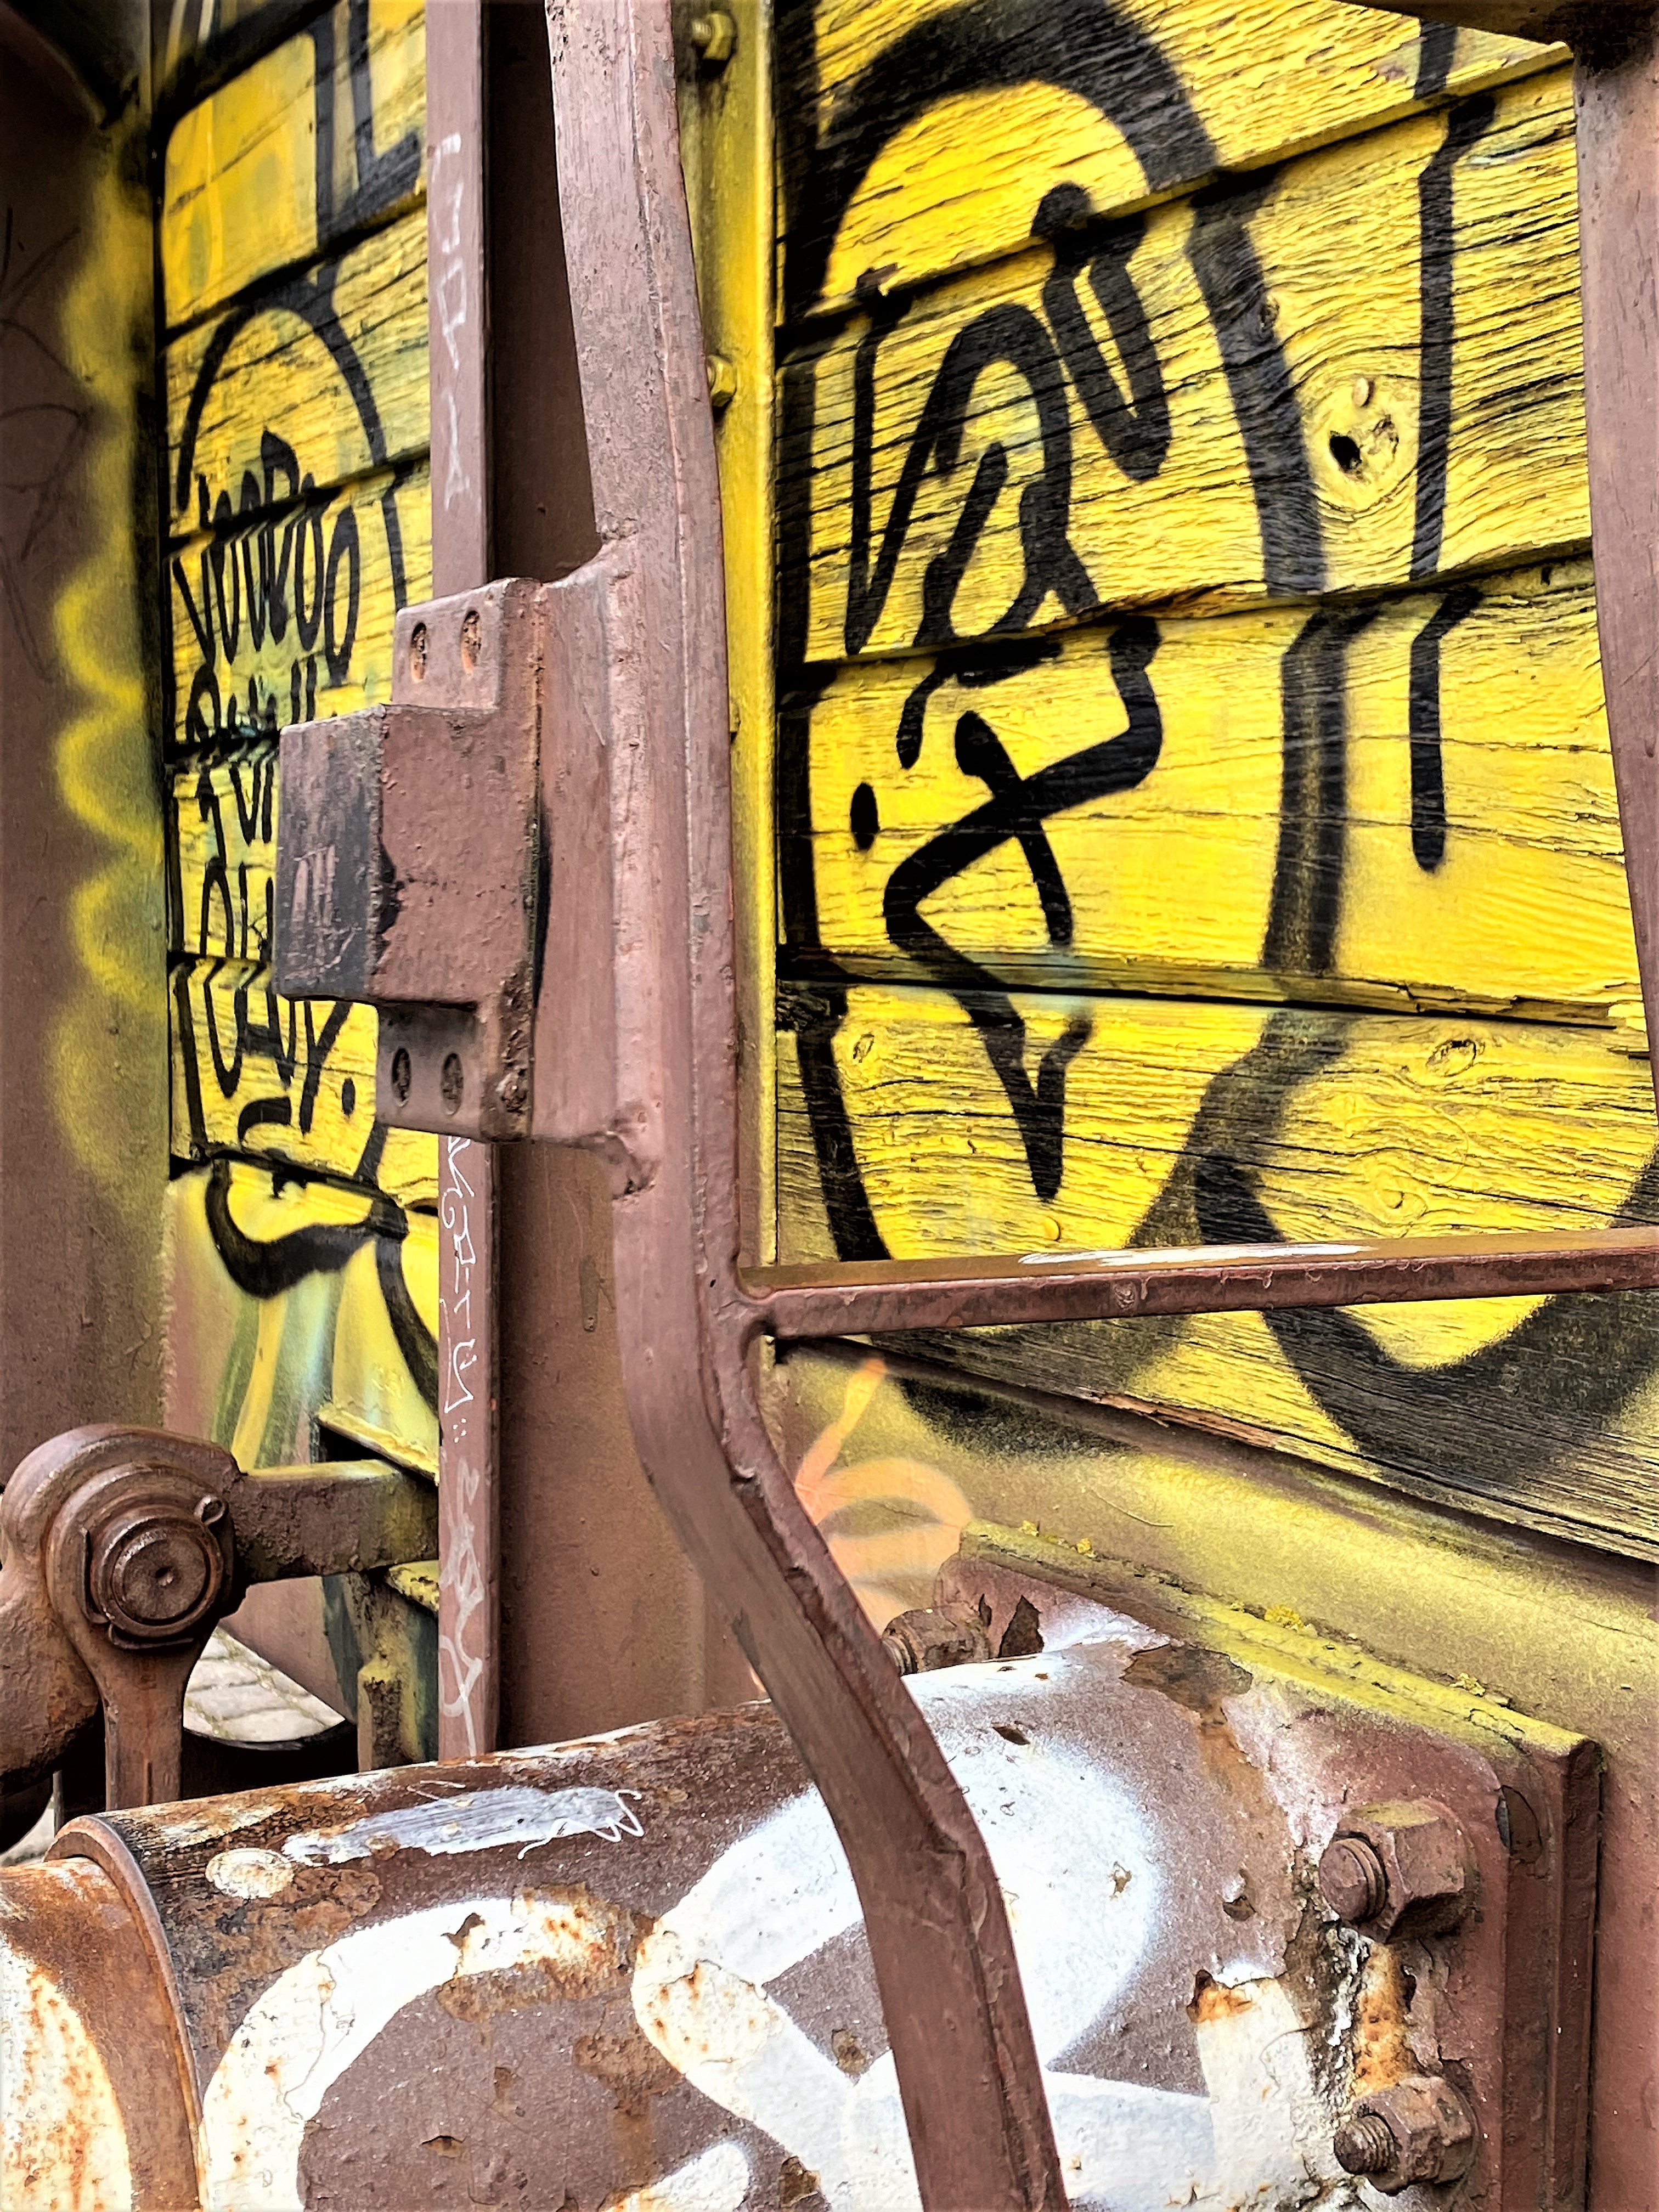 Farvestærk togvognsgraffiti (Mere gul i bybilledet, tak)